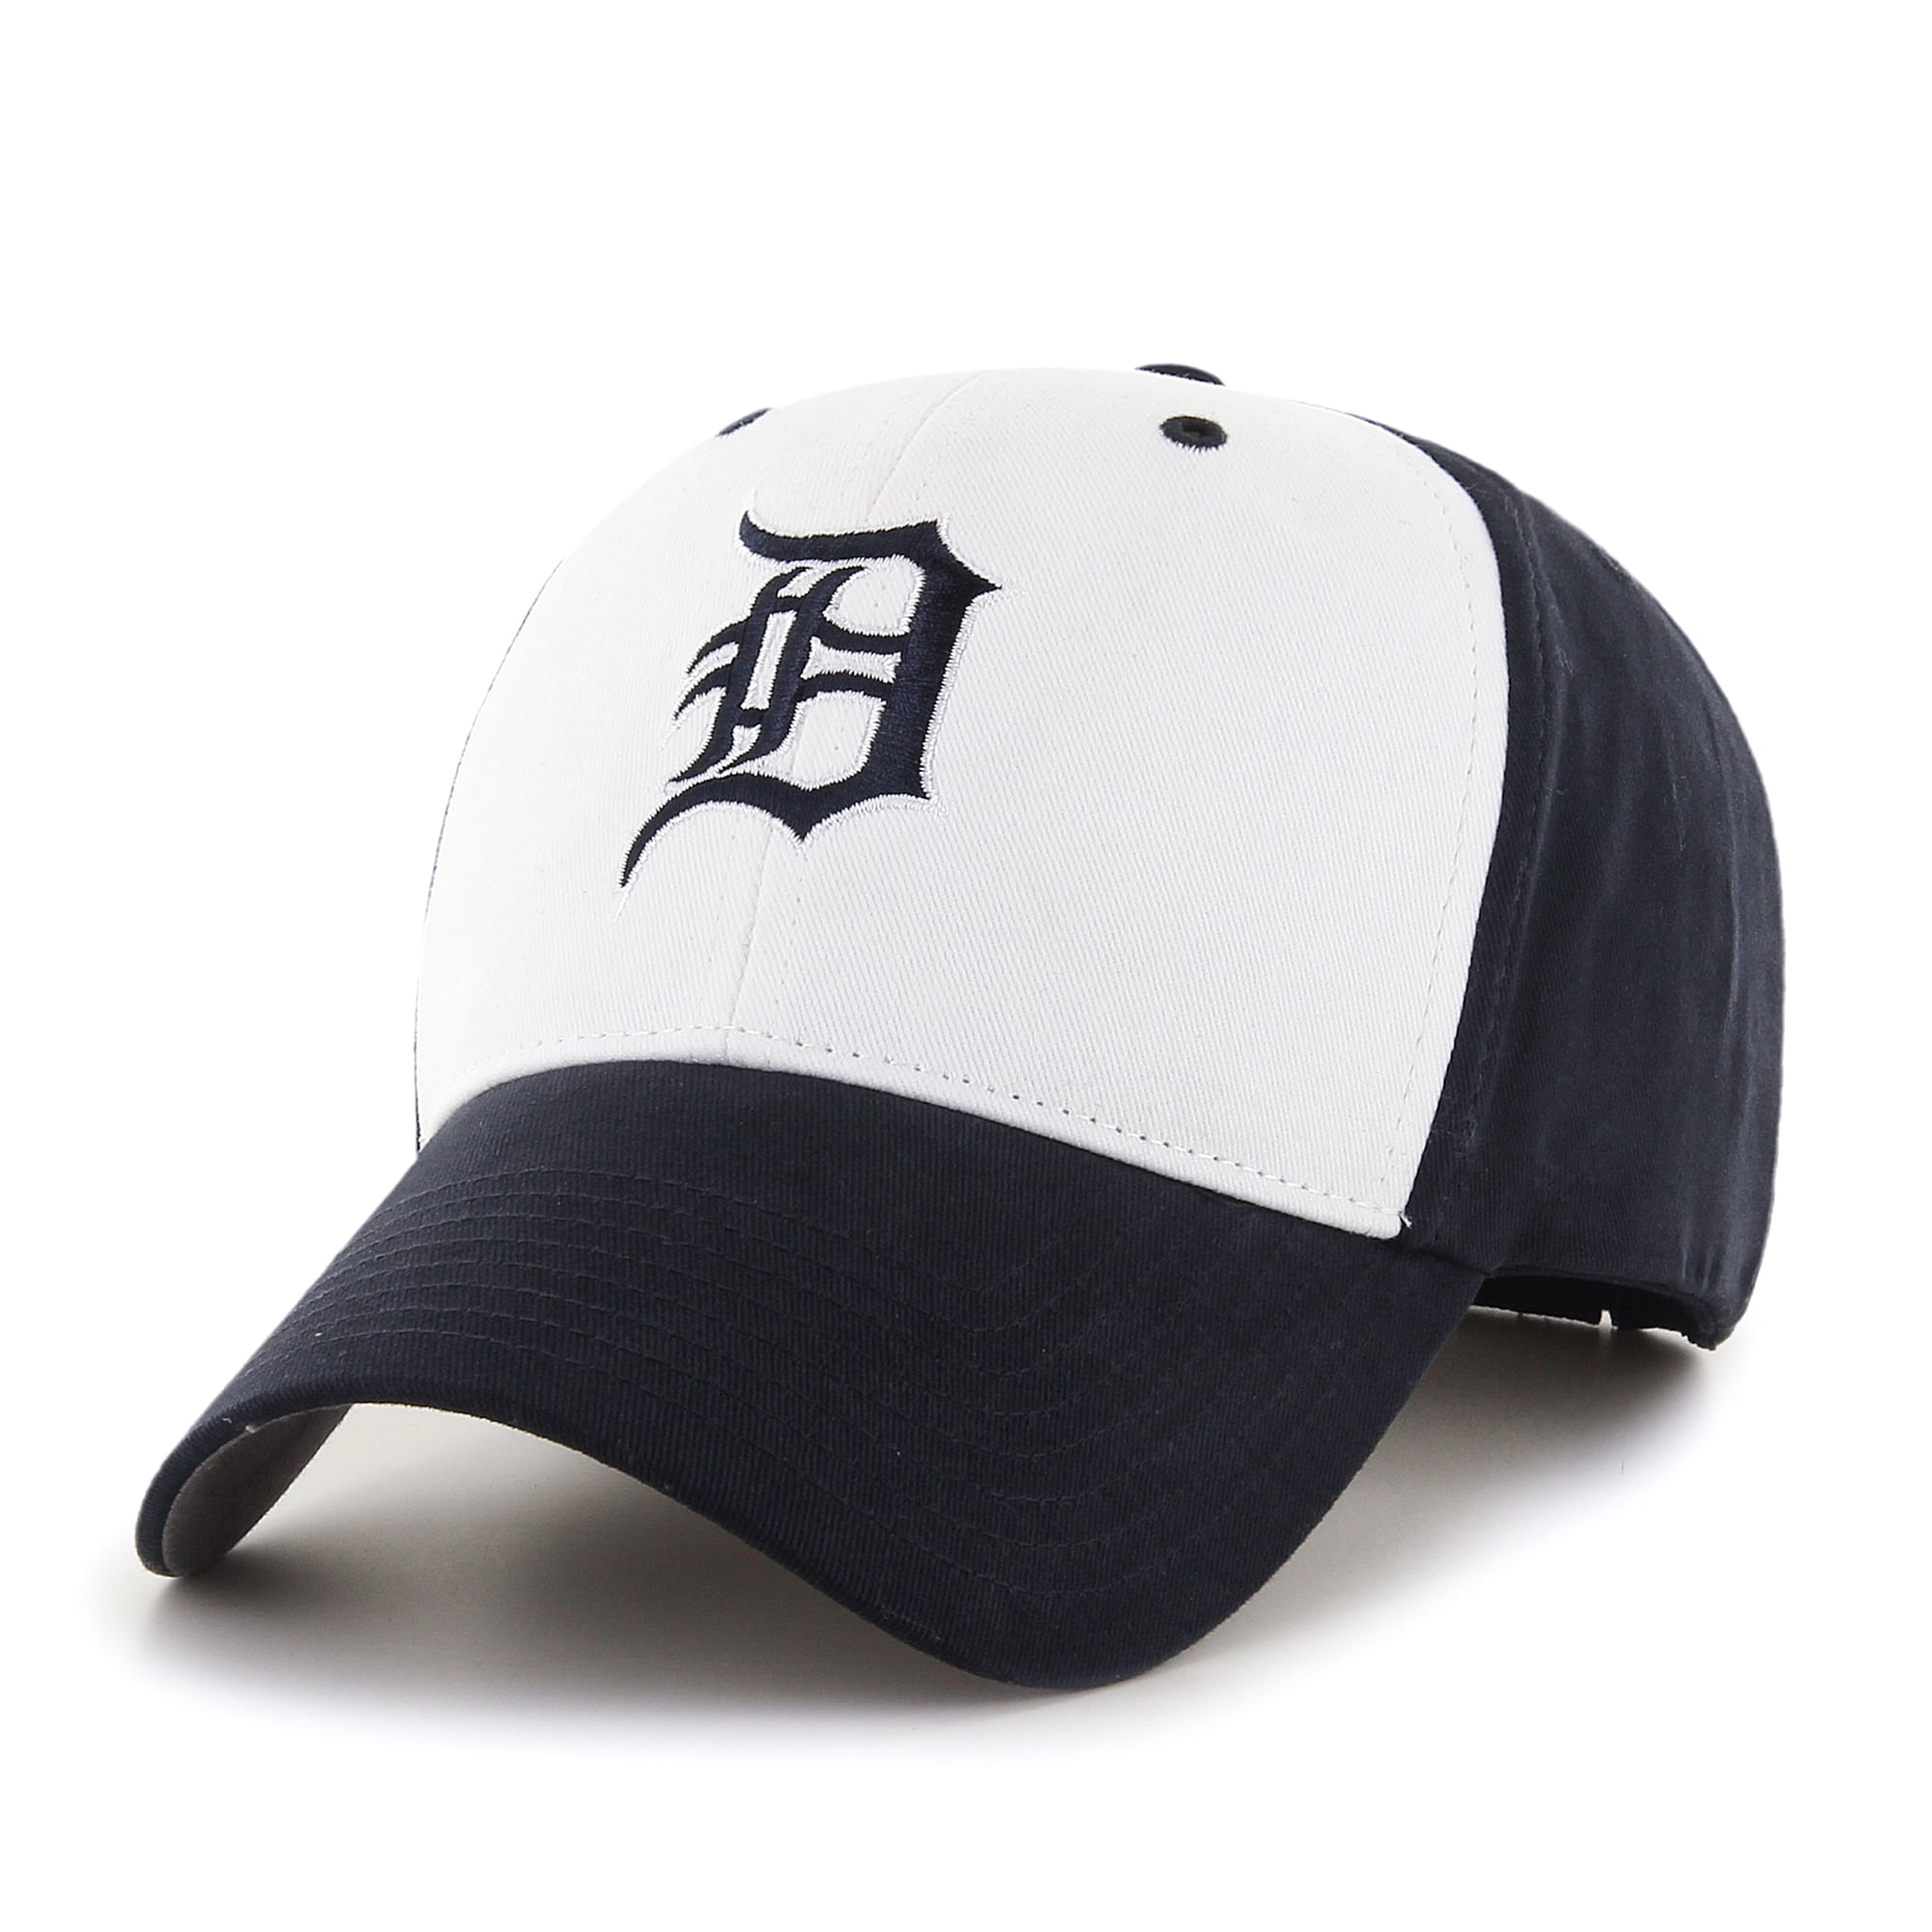 MLB Detroit Tigers Reverse Basic Adjustable Cap/Hat by Fan Favorite 